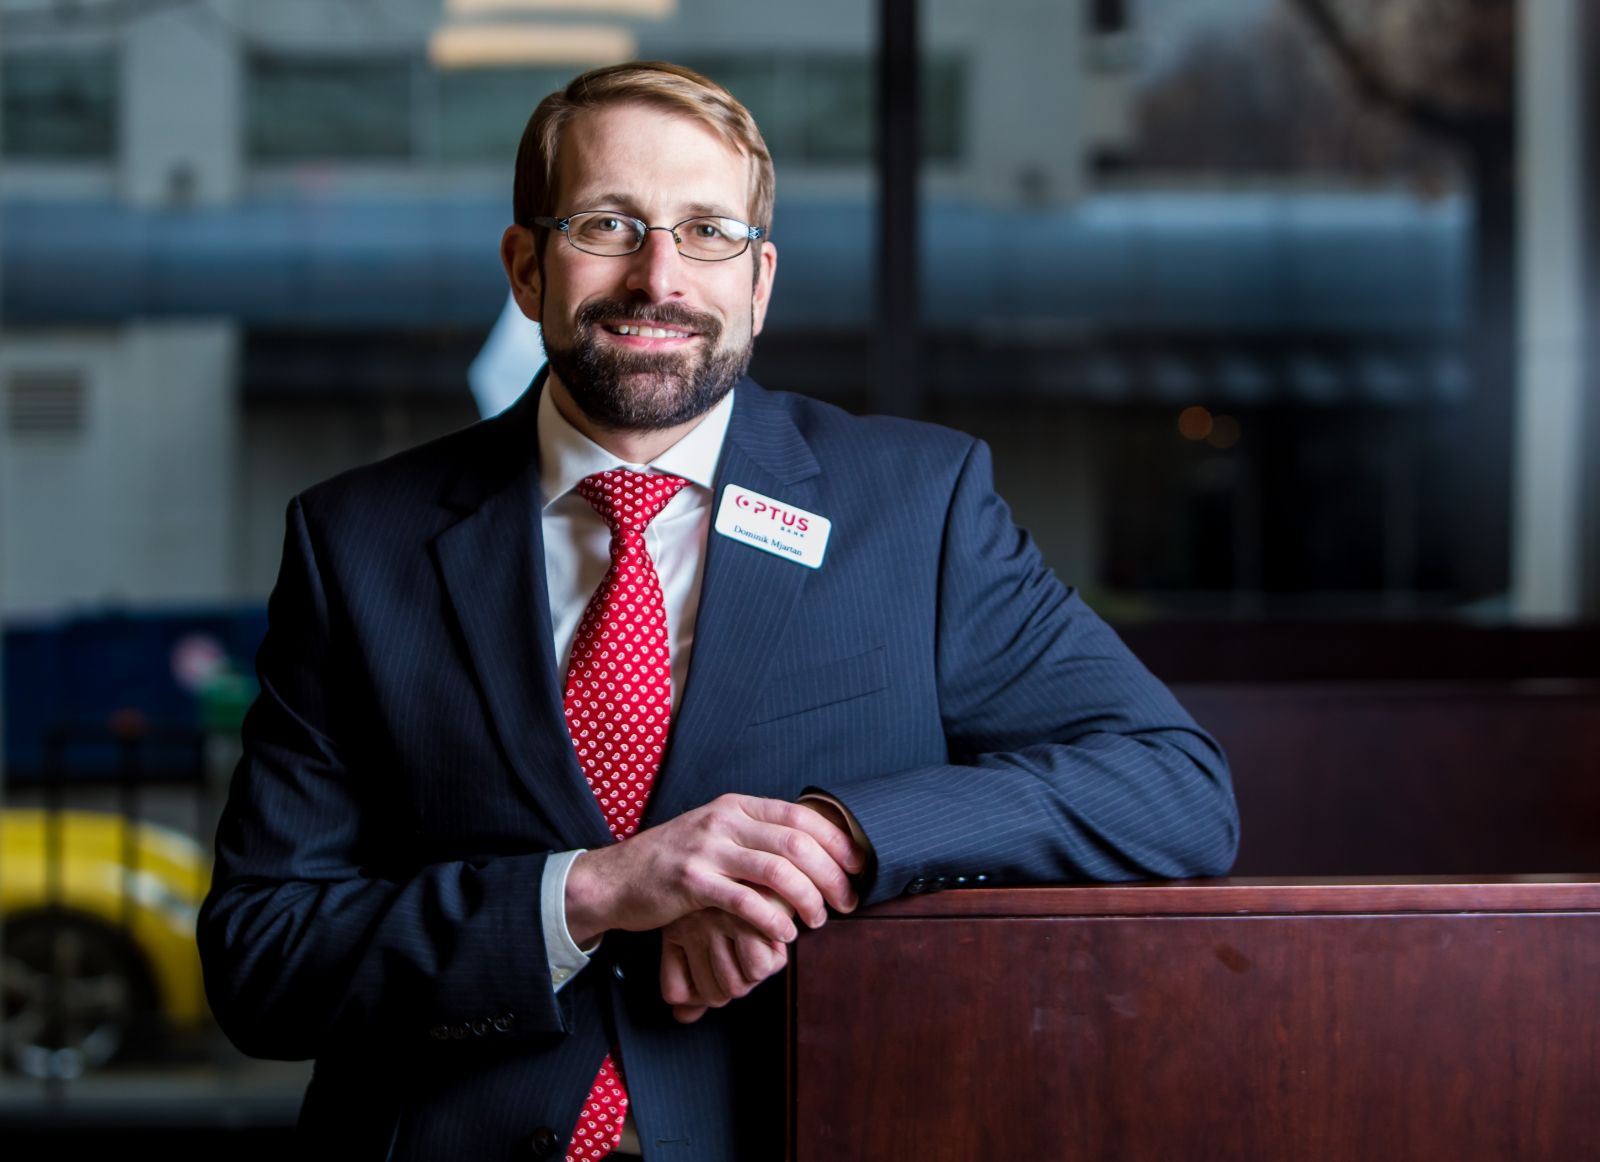 Dominik Mjartan, president and CEO of Optus Bank, has overseen the bank's turnaround since assuming his leadership role in September 2017. (Photo/Jeff Blake/www.JeffBlakePhoto.com)